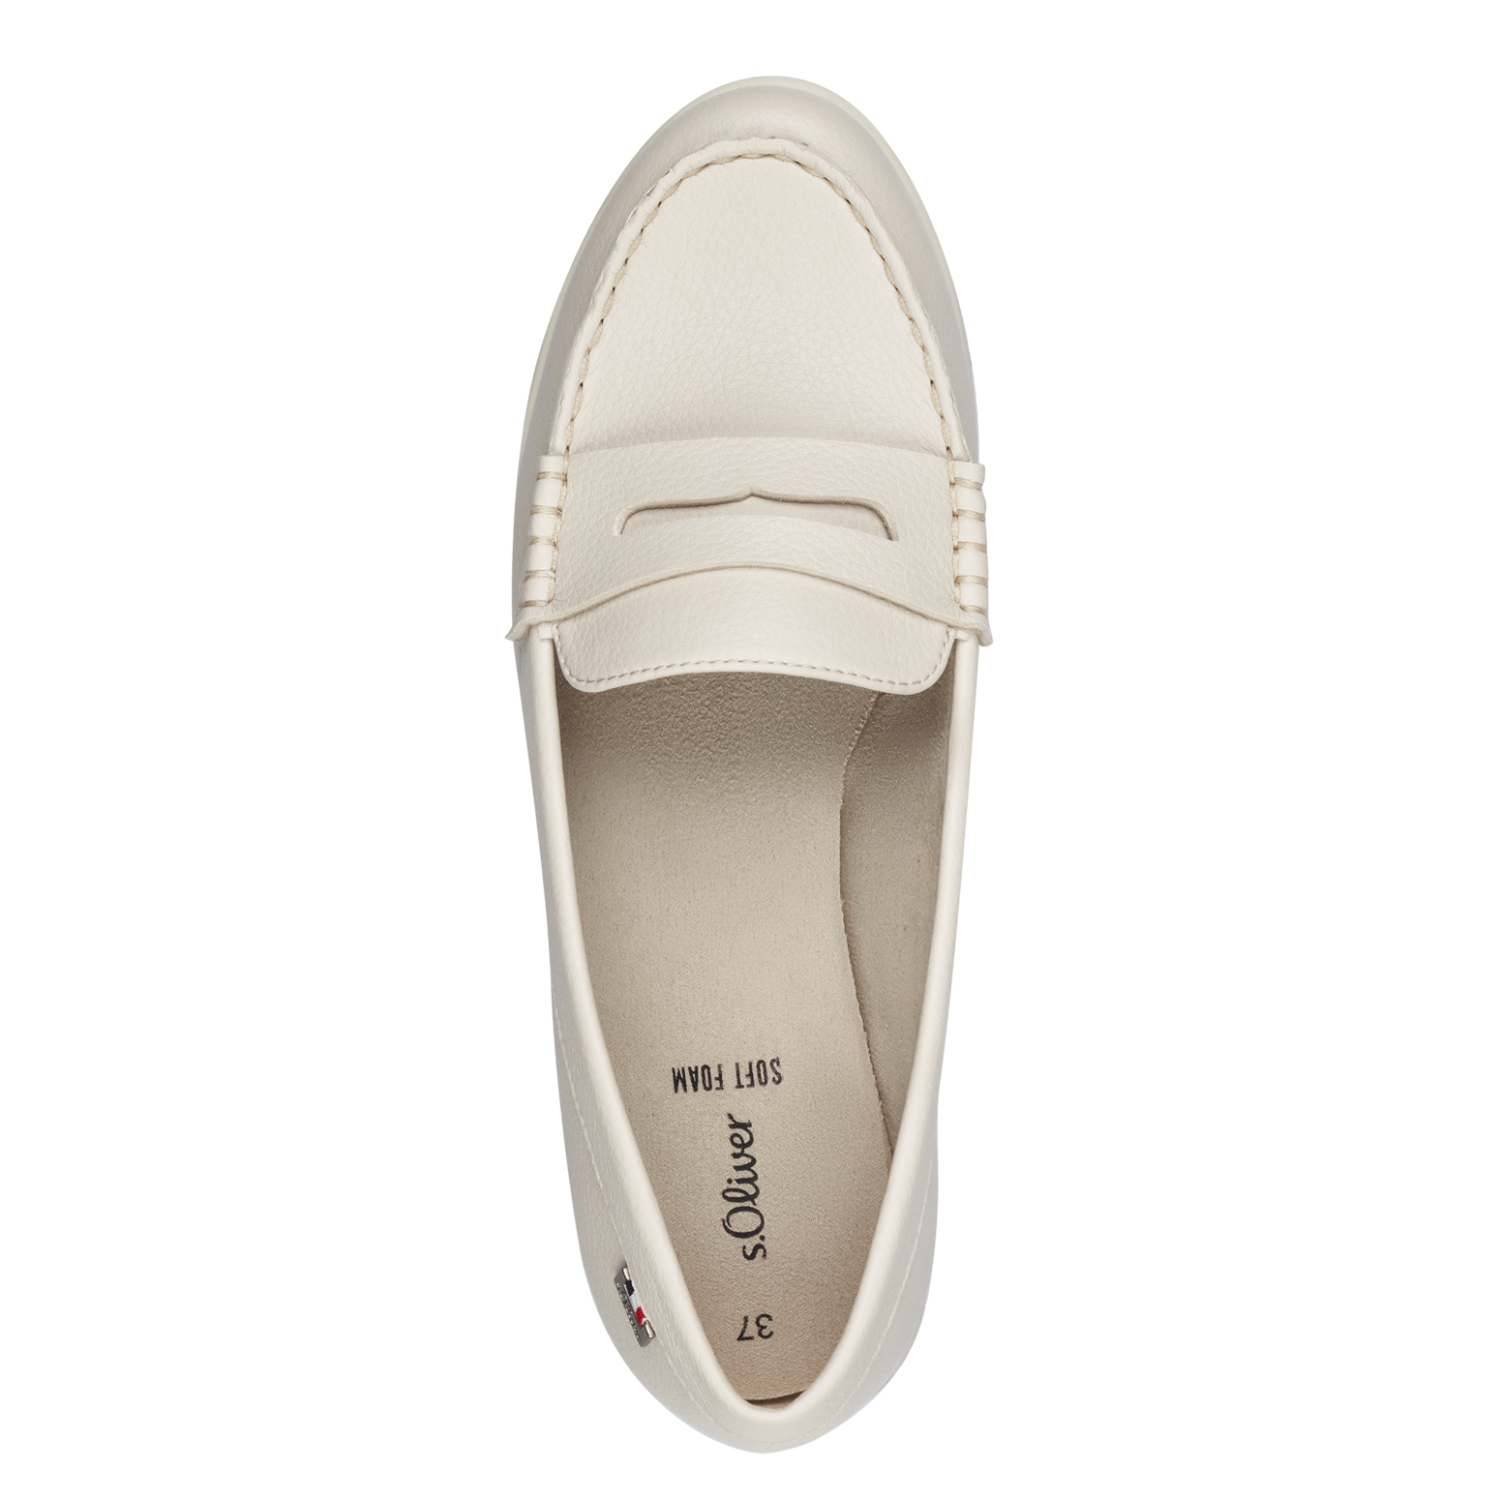 Pantofi Casual Allura White - S.Oliver